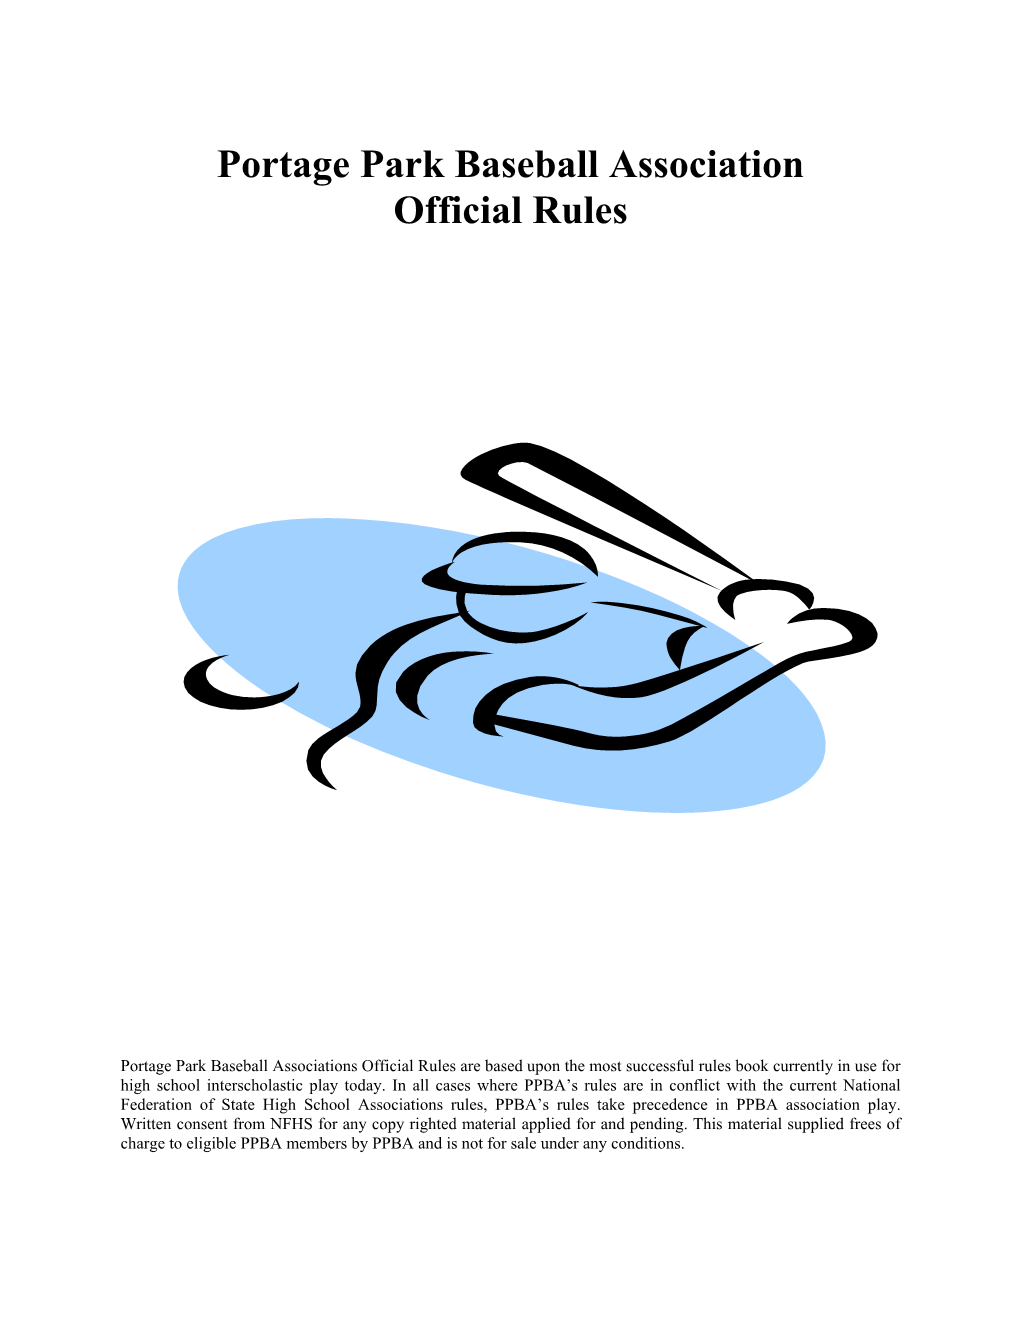 Portage Park Baseball Association Official Rules